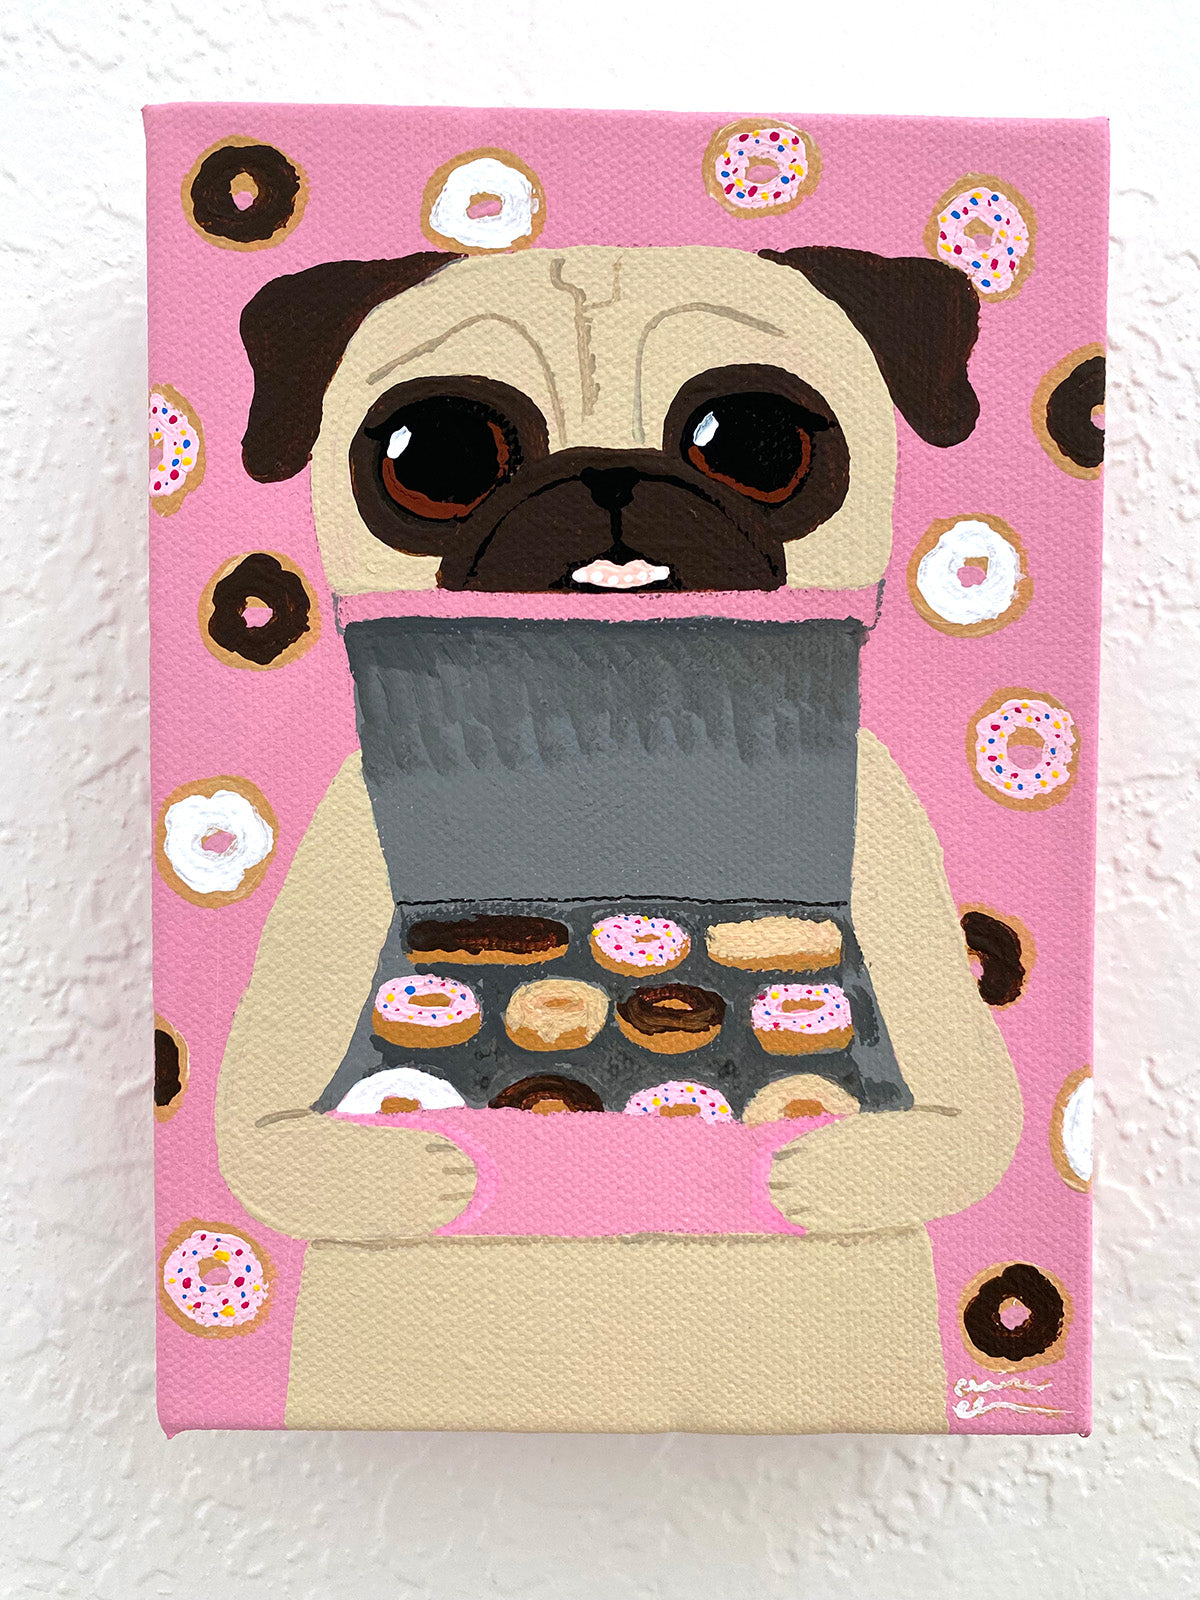 I Brought Donuts - Art Treats #19